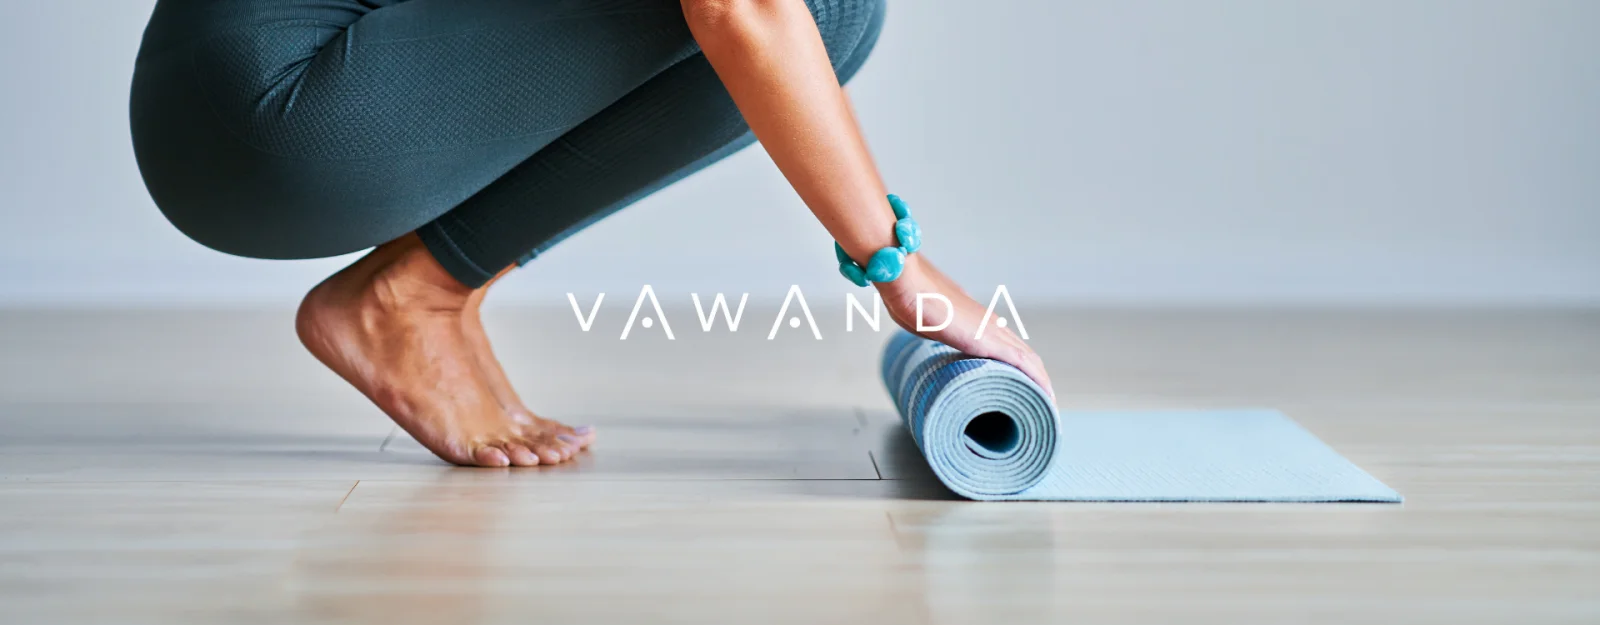 tapis de yoga avec logo vawanda